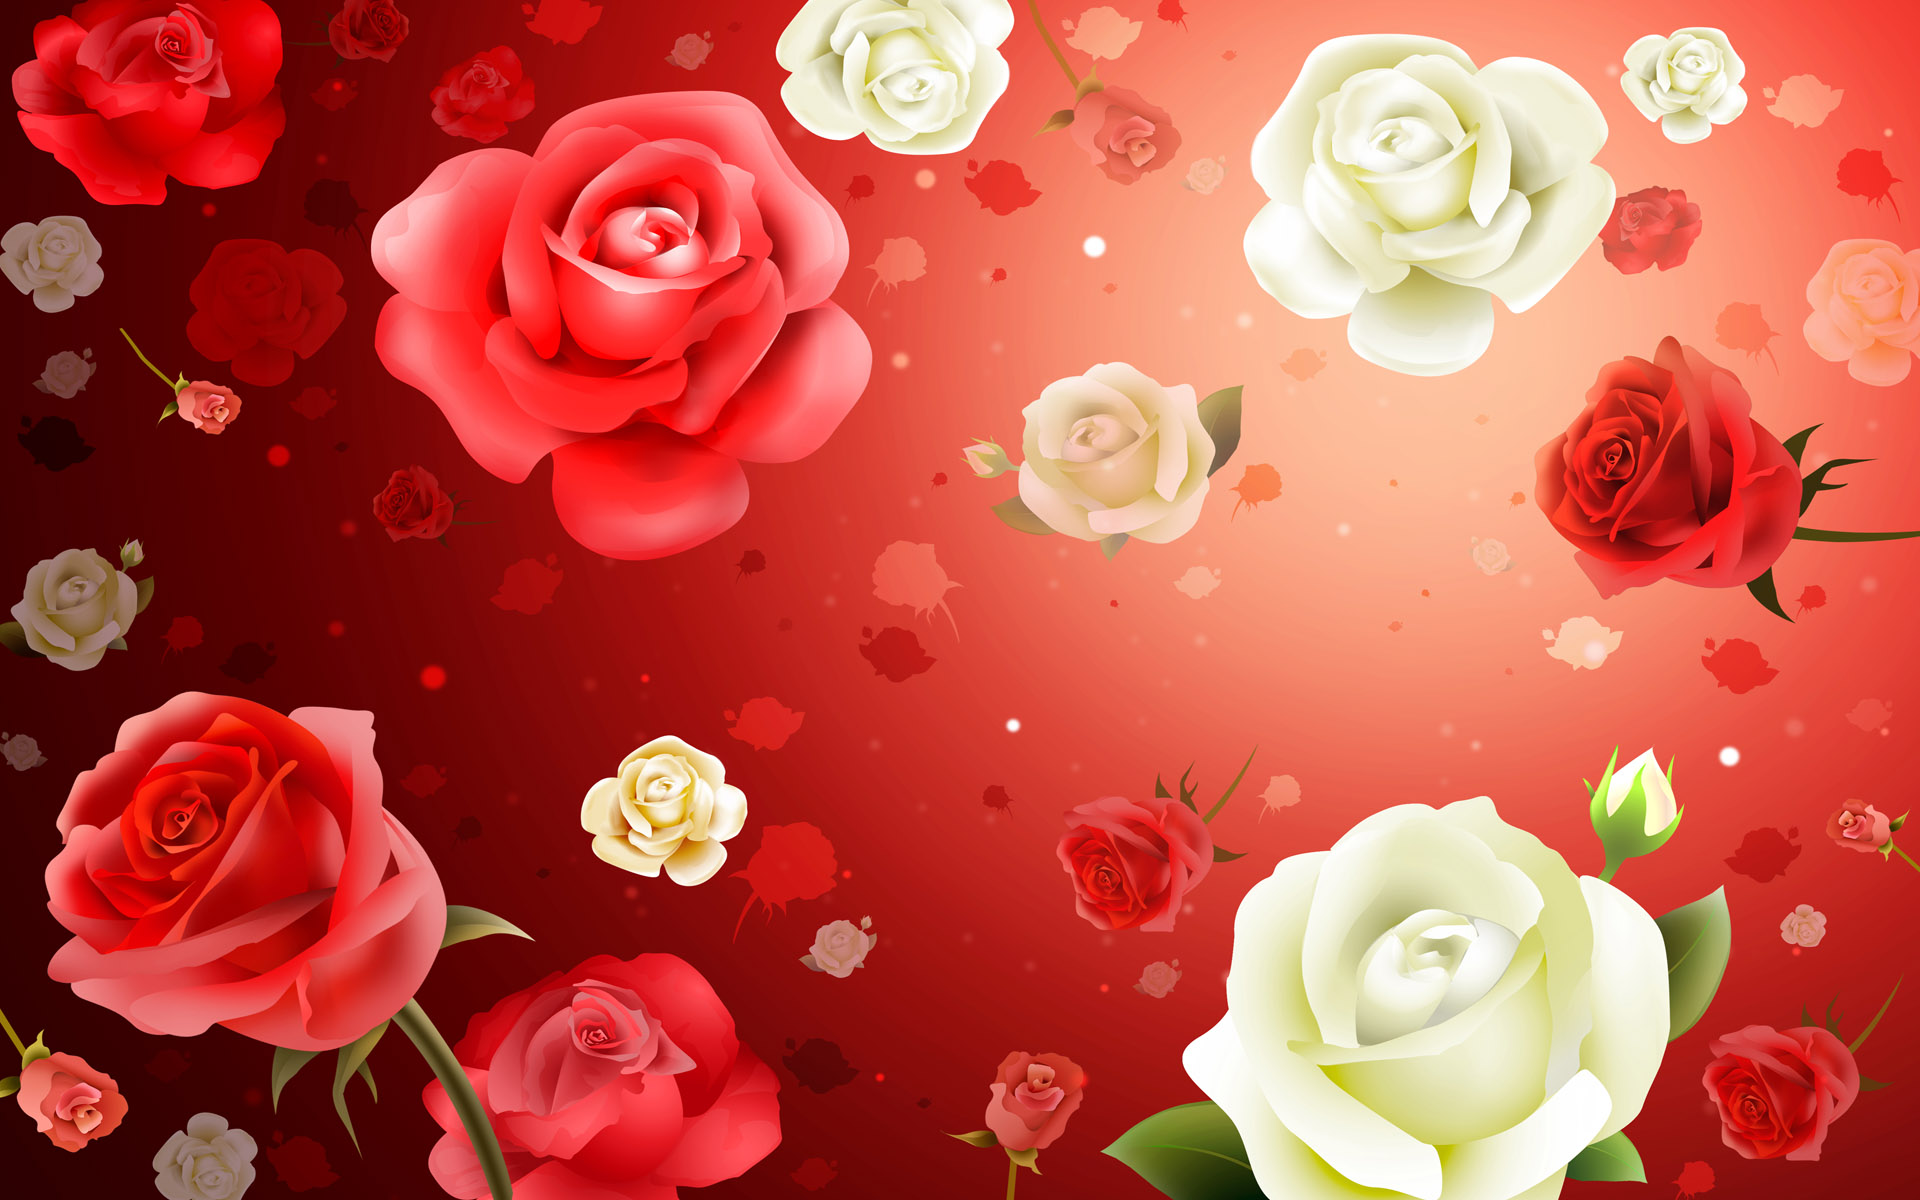 Roses background wallpaper